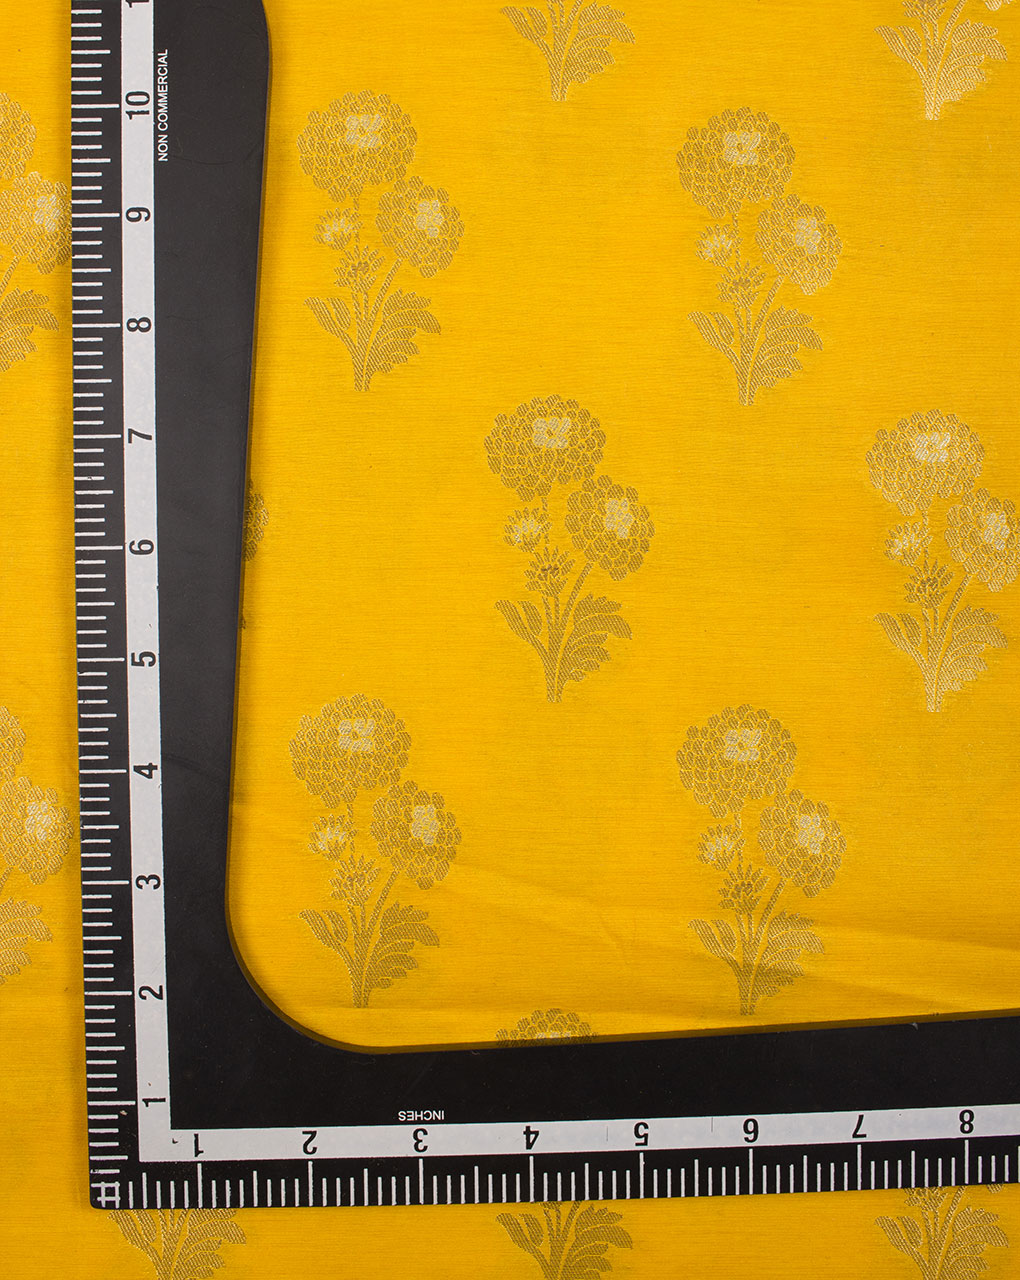 Yellow & Gold Floral Pattern Zari Jacquard Banarasi Taffeta Silk Fabric - Fabriclore.com